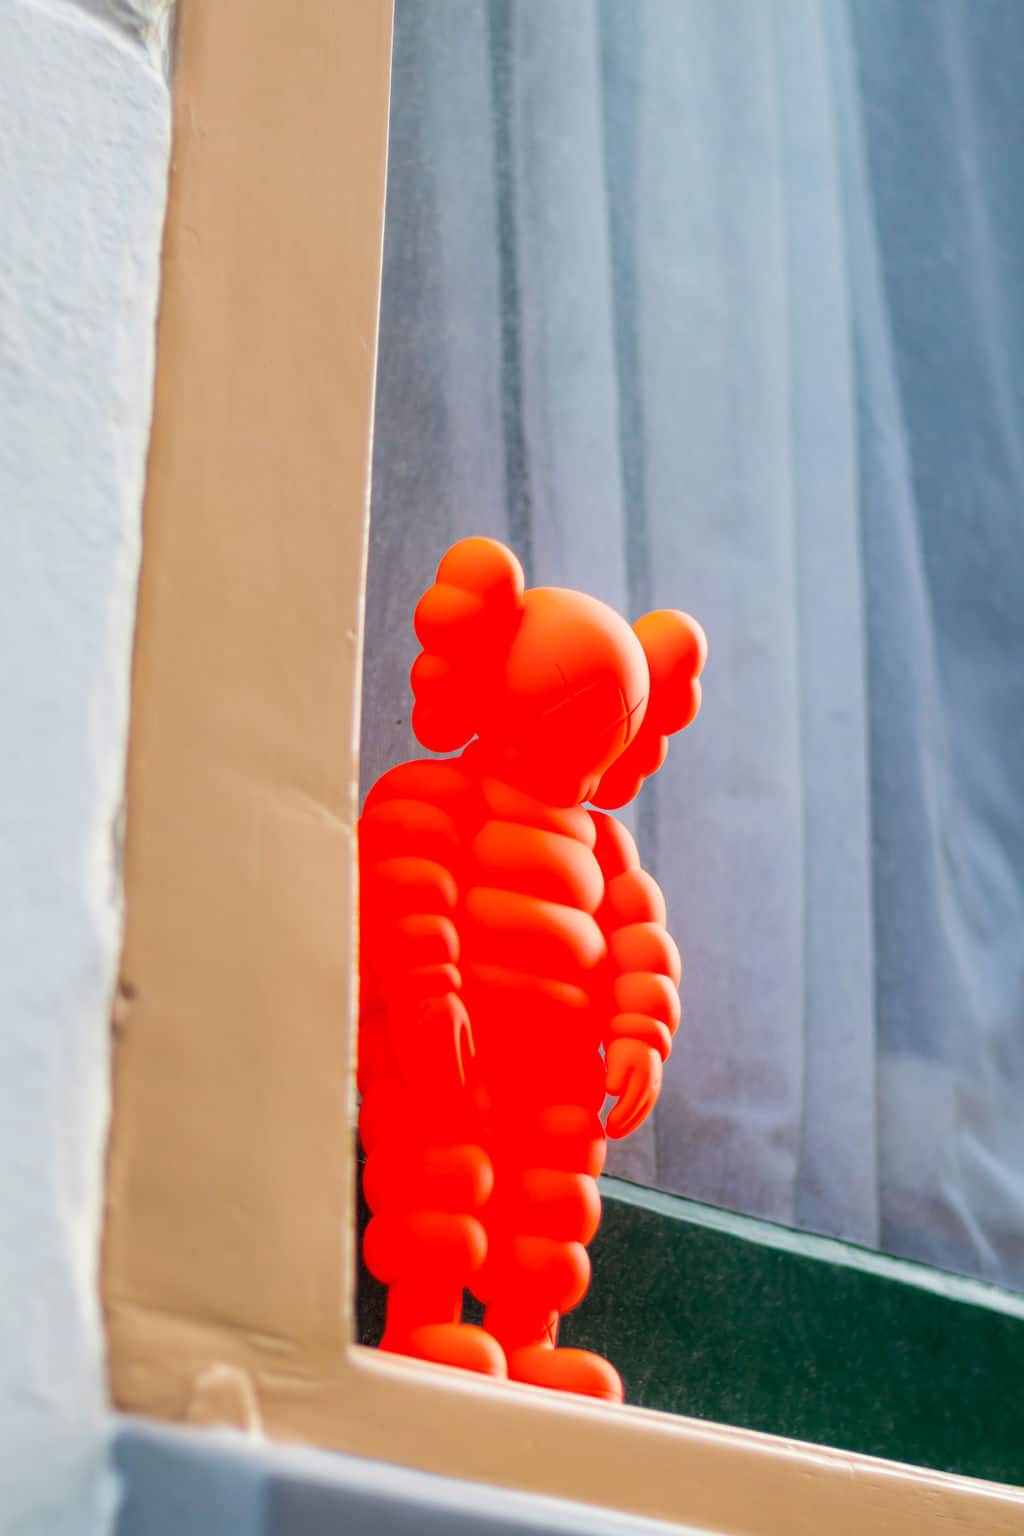 KAWS What Party - orange | Kunsthuizen